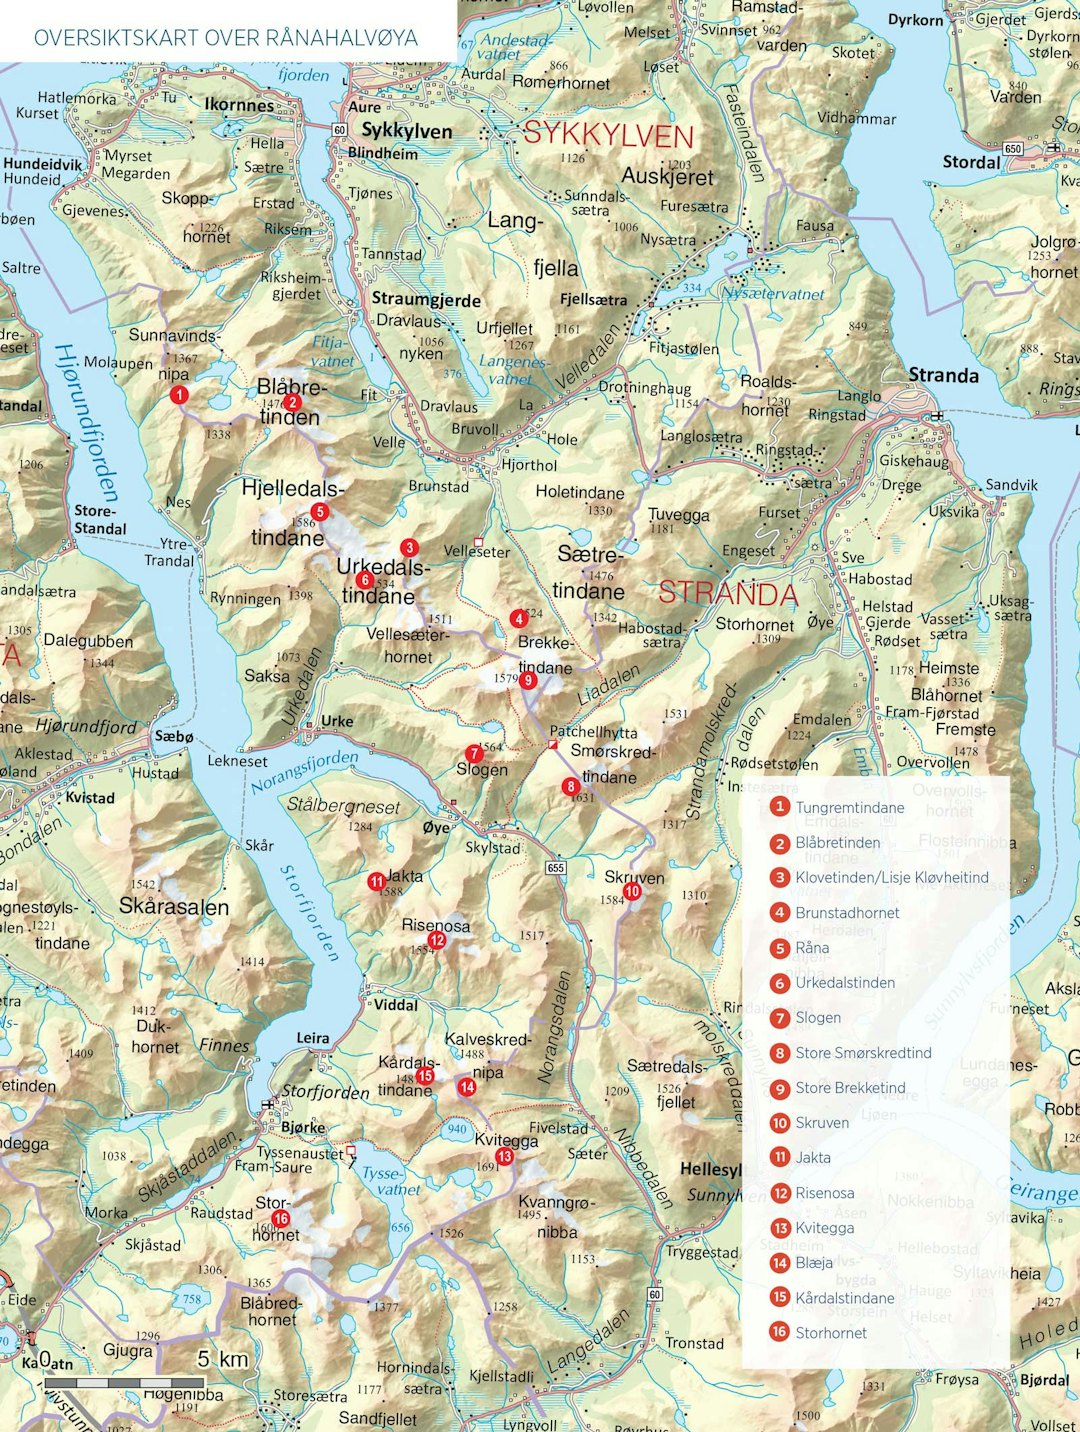 Oversiktskart over Rånahalvøya.